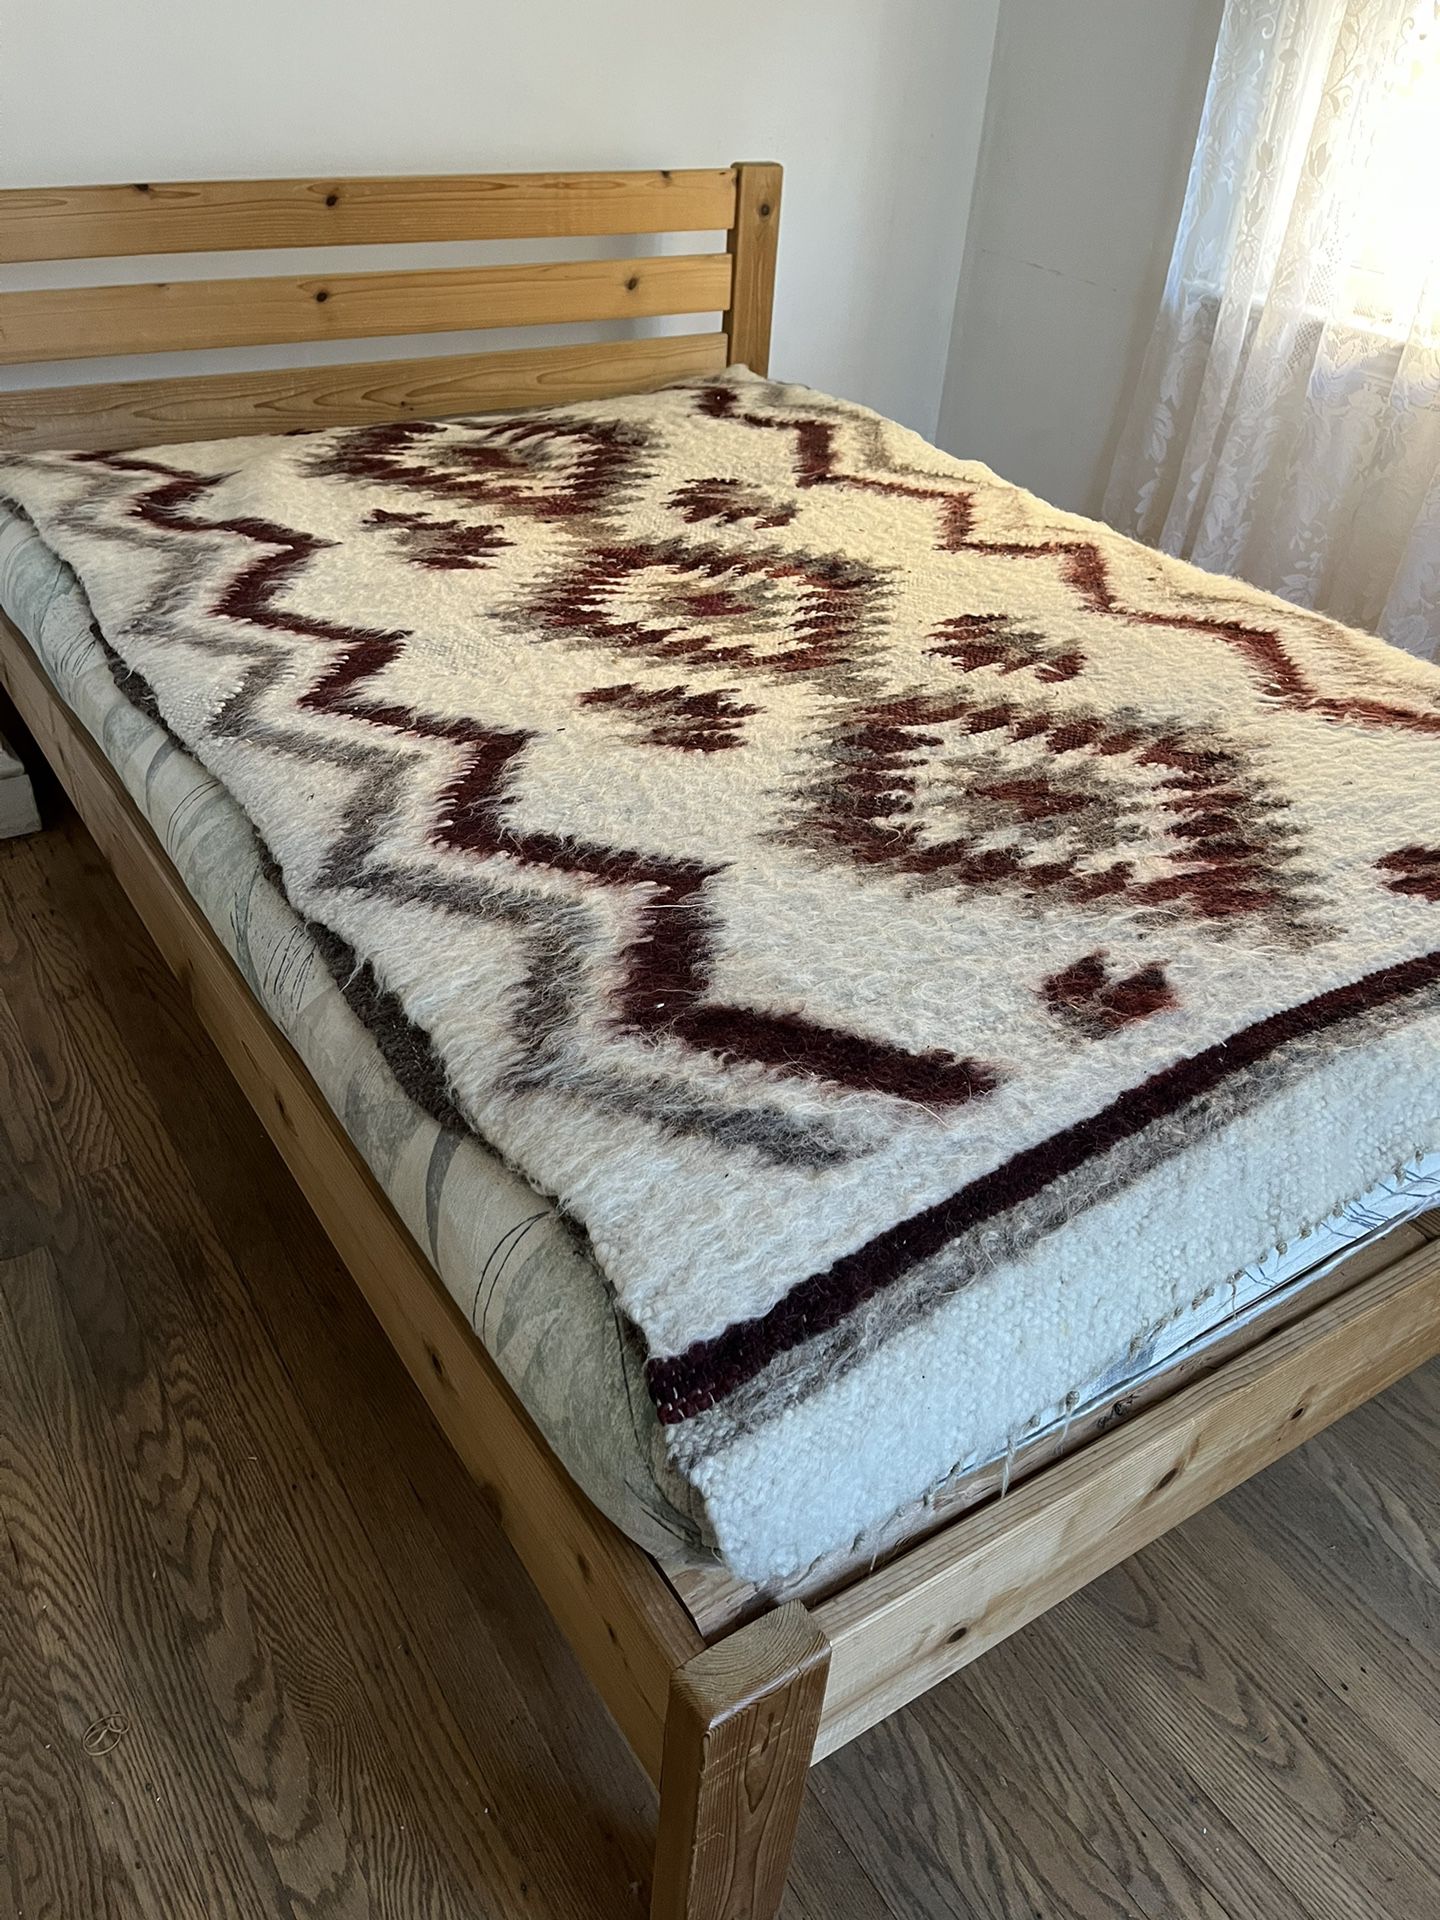 Full size cedar bed frame and futon mattress 